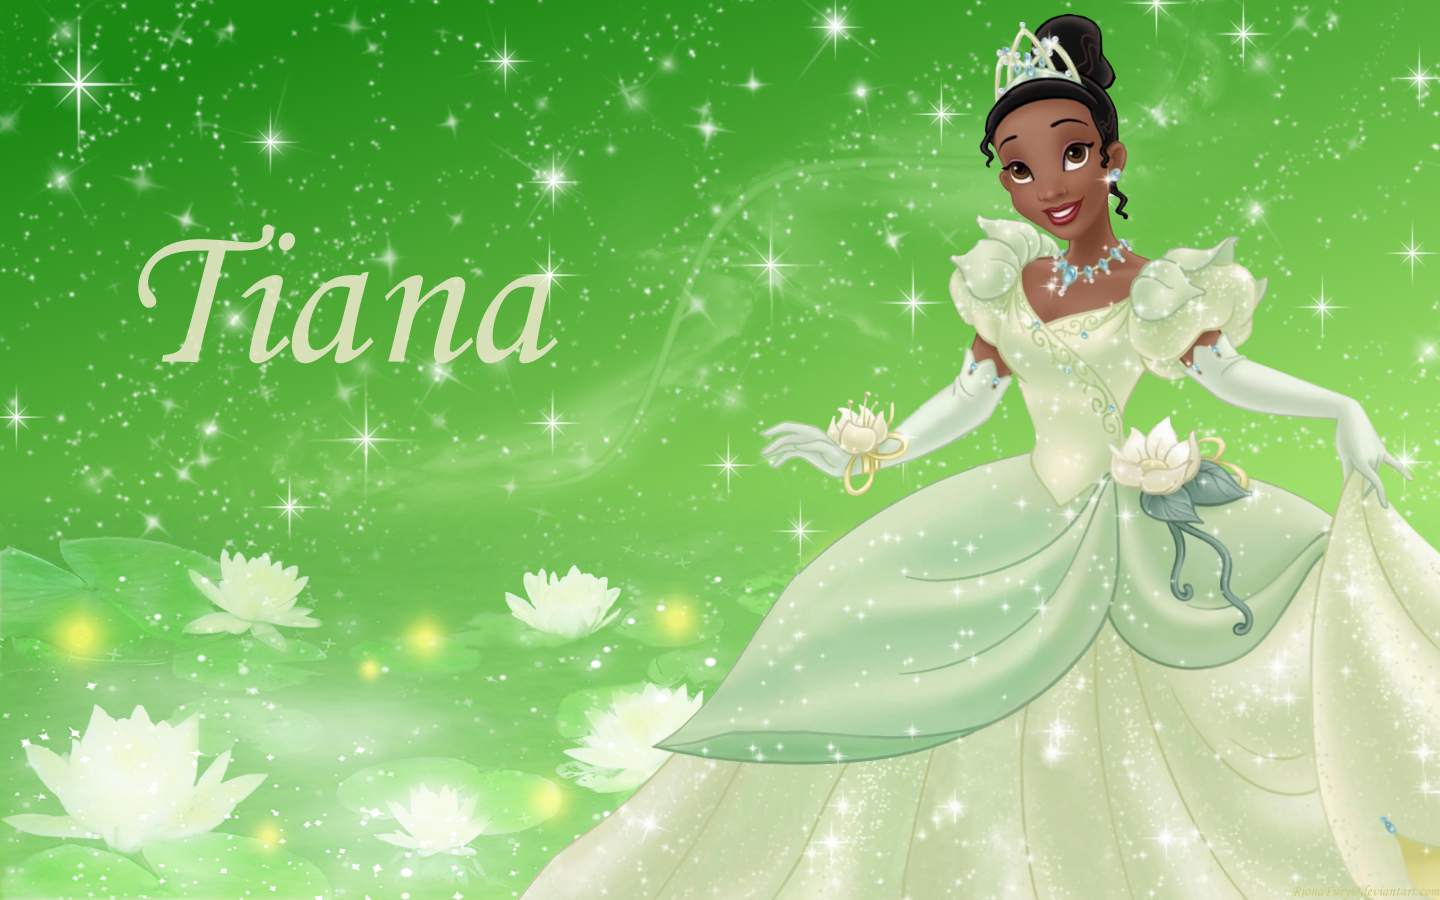 Free download The Princess and the Frog Princess Tiana Cartoon HD Wallpaper...